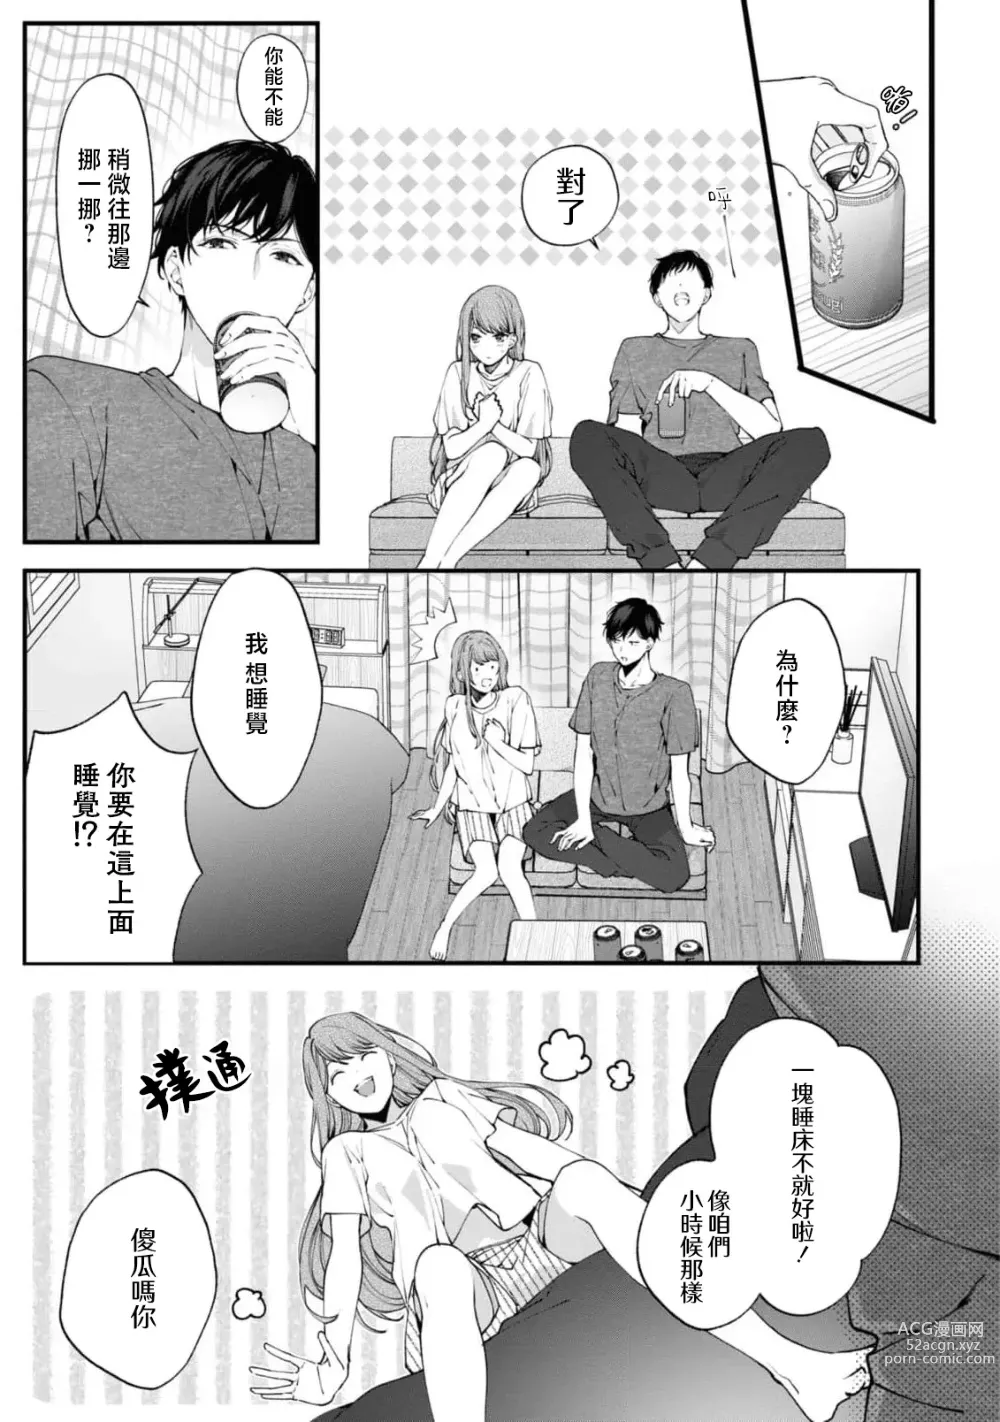 Page 6 of manga 「命运之恋近在咫尺～沉醉于好友的技巧之中～」